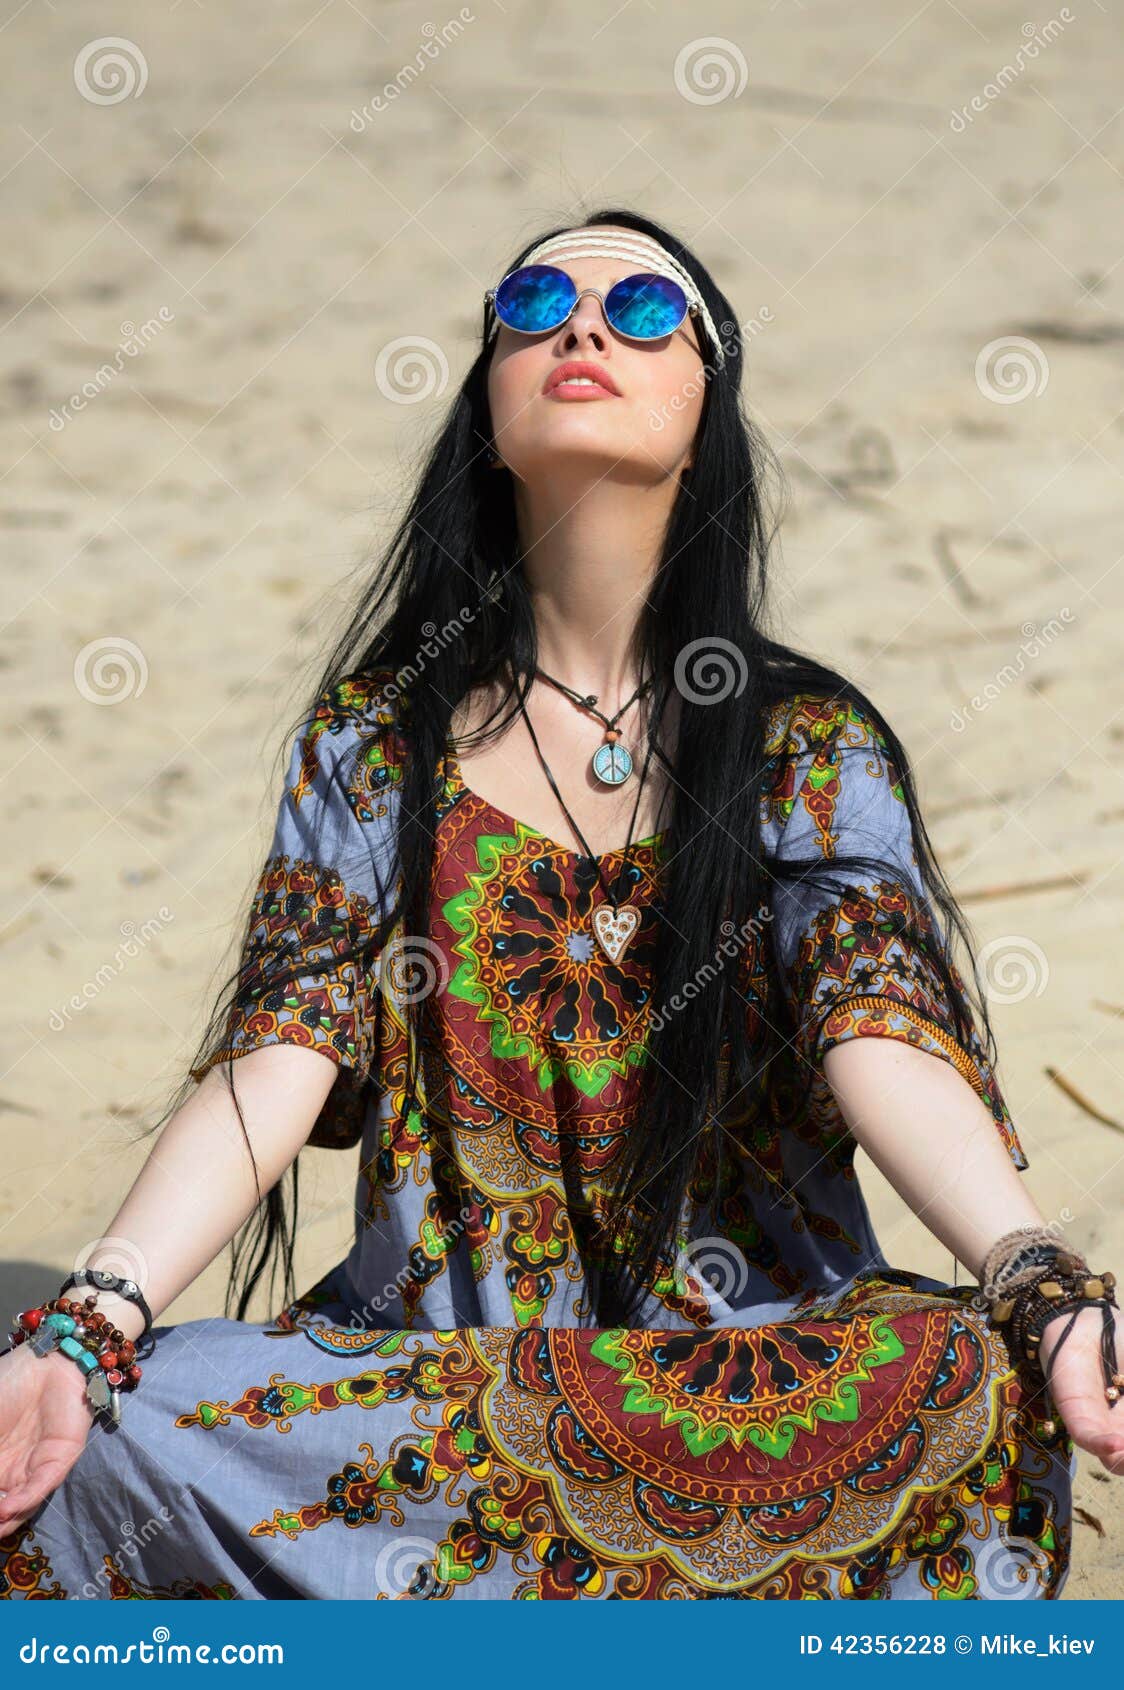 exotic hairy hippie girl